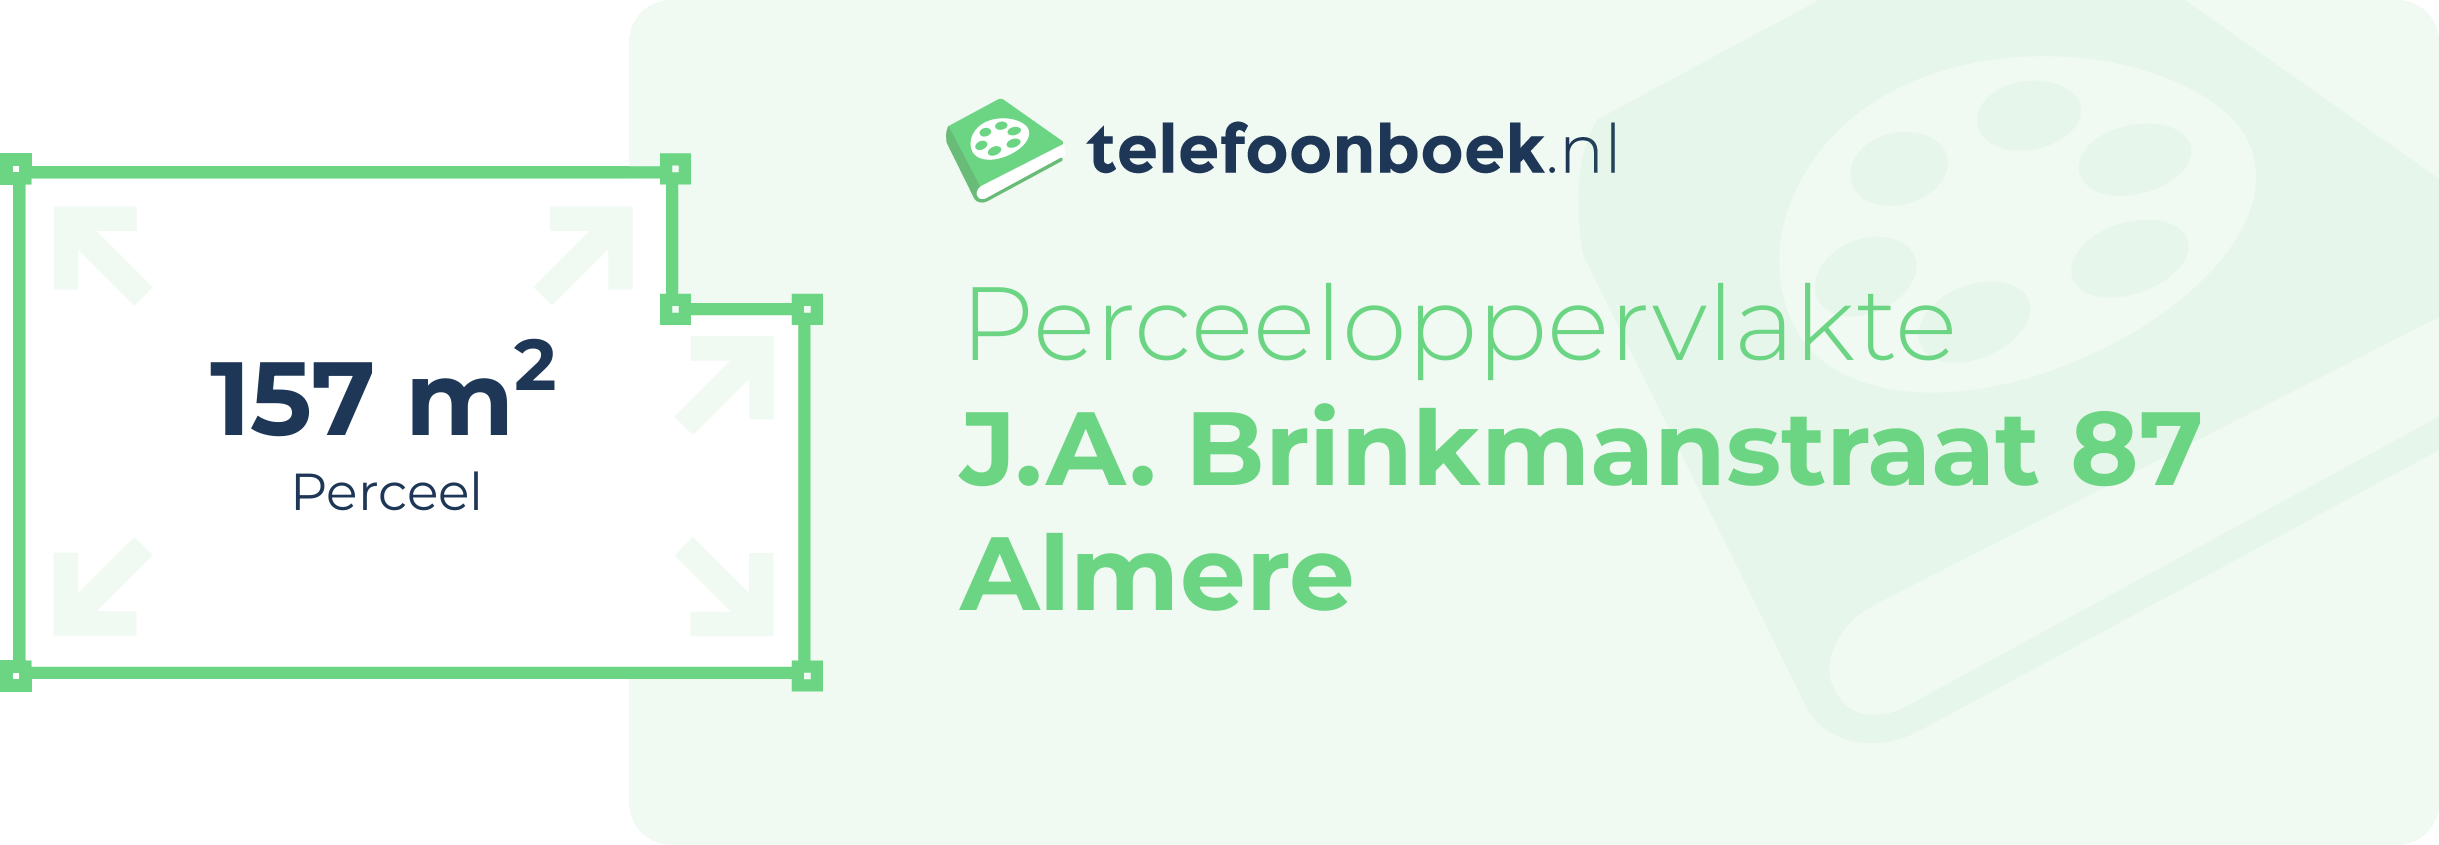 Perceeloppervlakte J.A. Brinkmanstraat 87 Almere